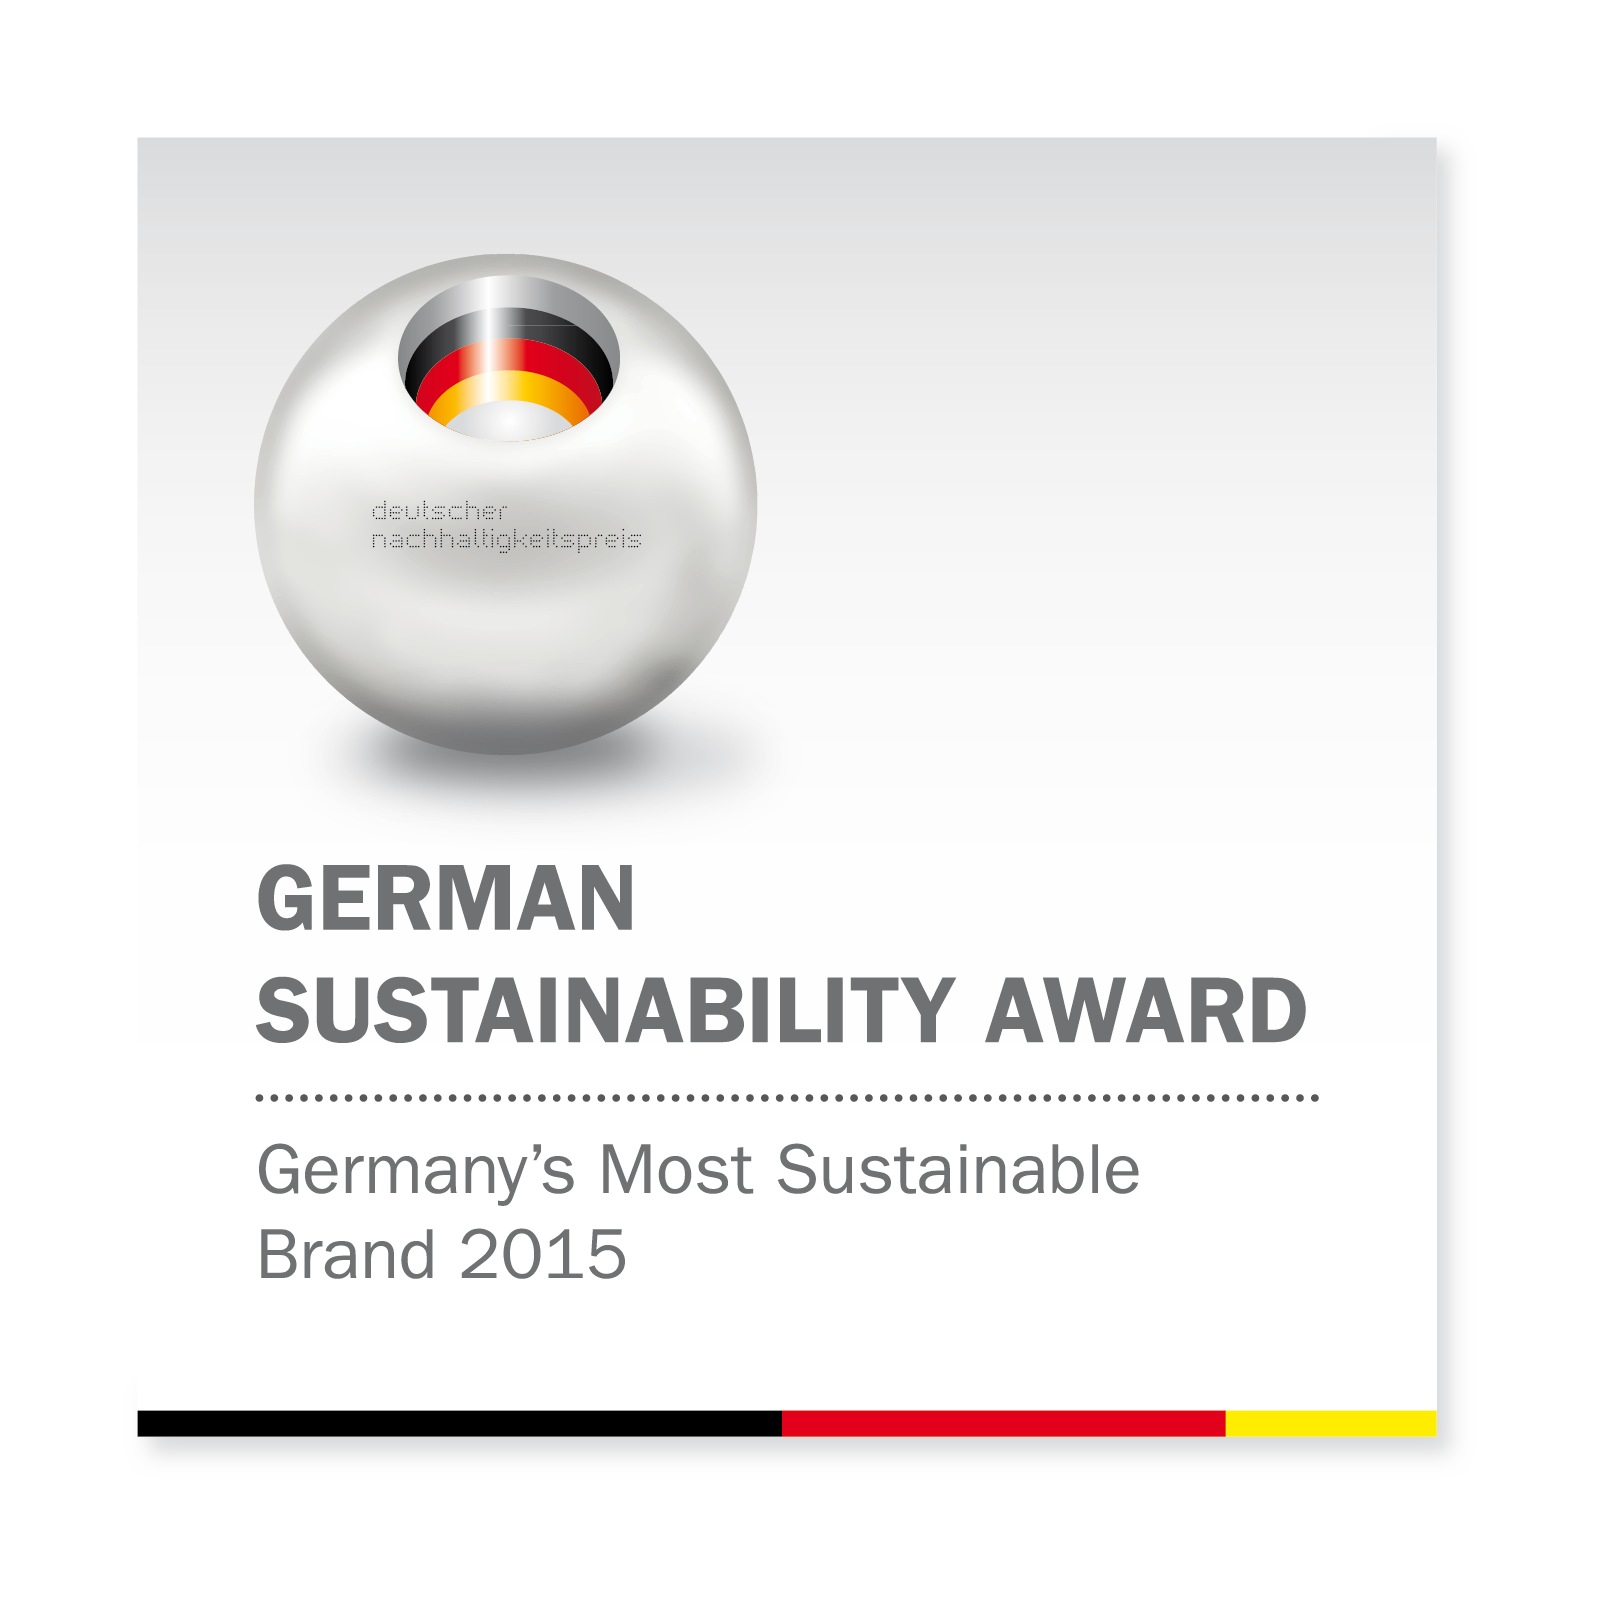 German Sustainability Award 2015